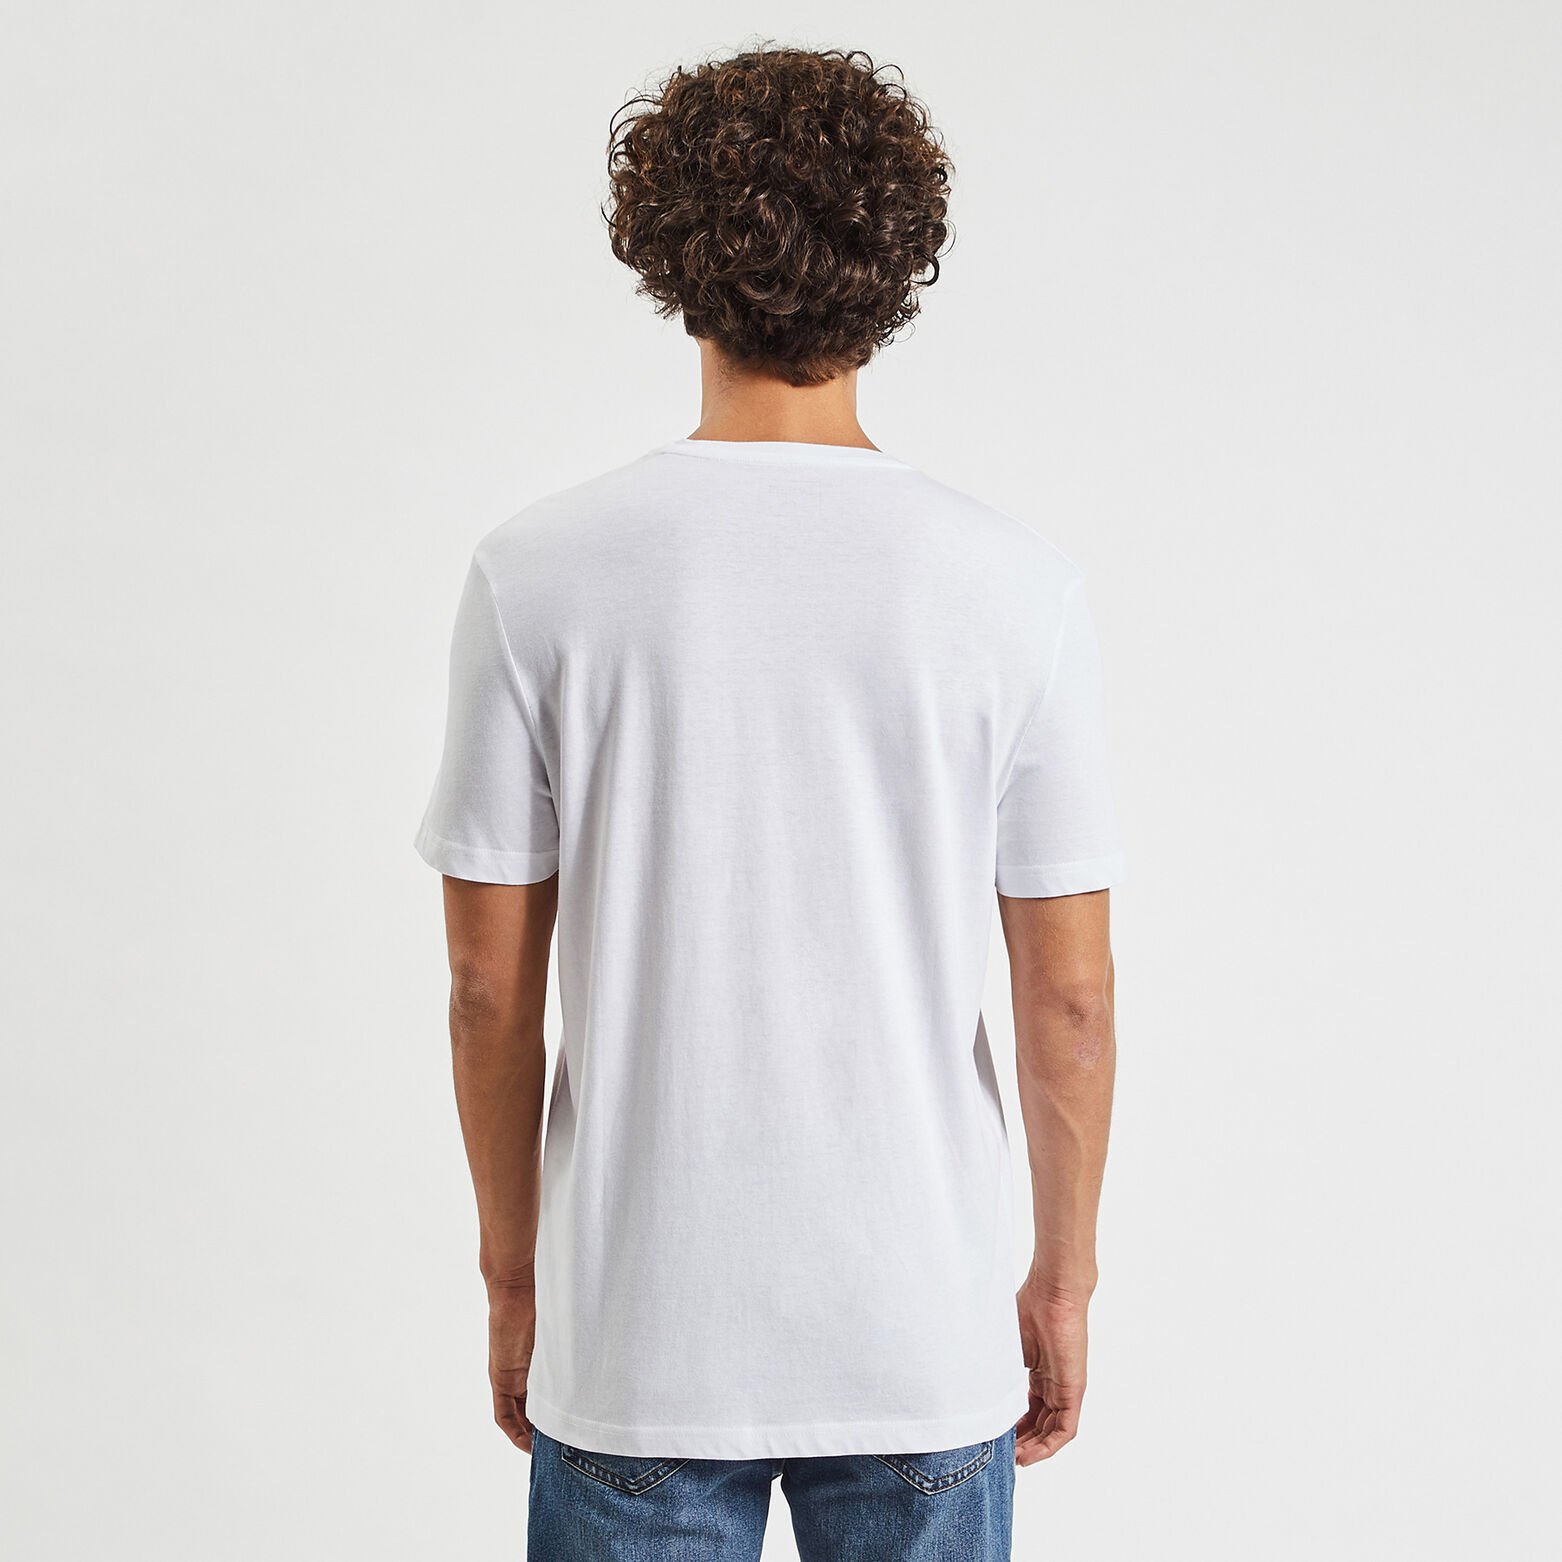 Basic T-shirt met ronde hals